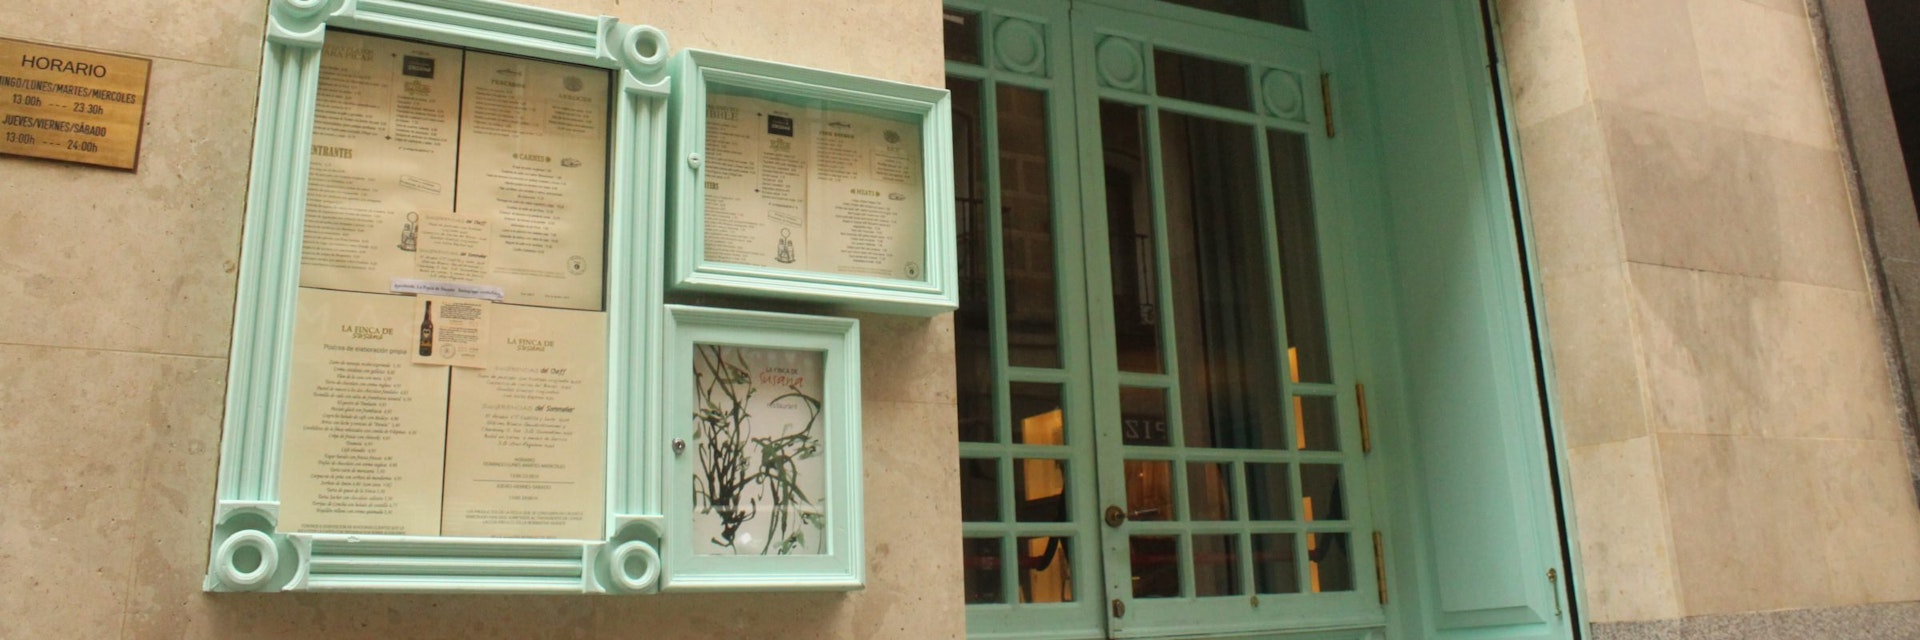 The entire menu is displayed outside of La Finca de Susana.